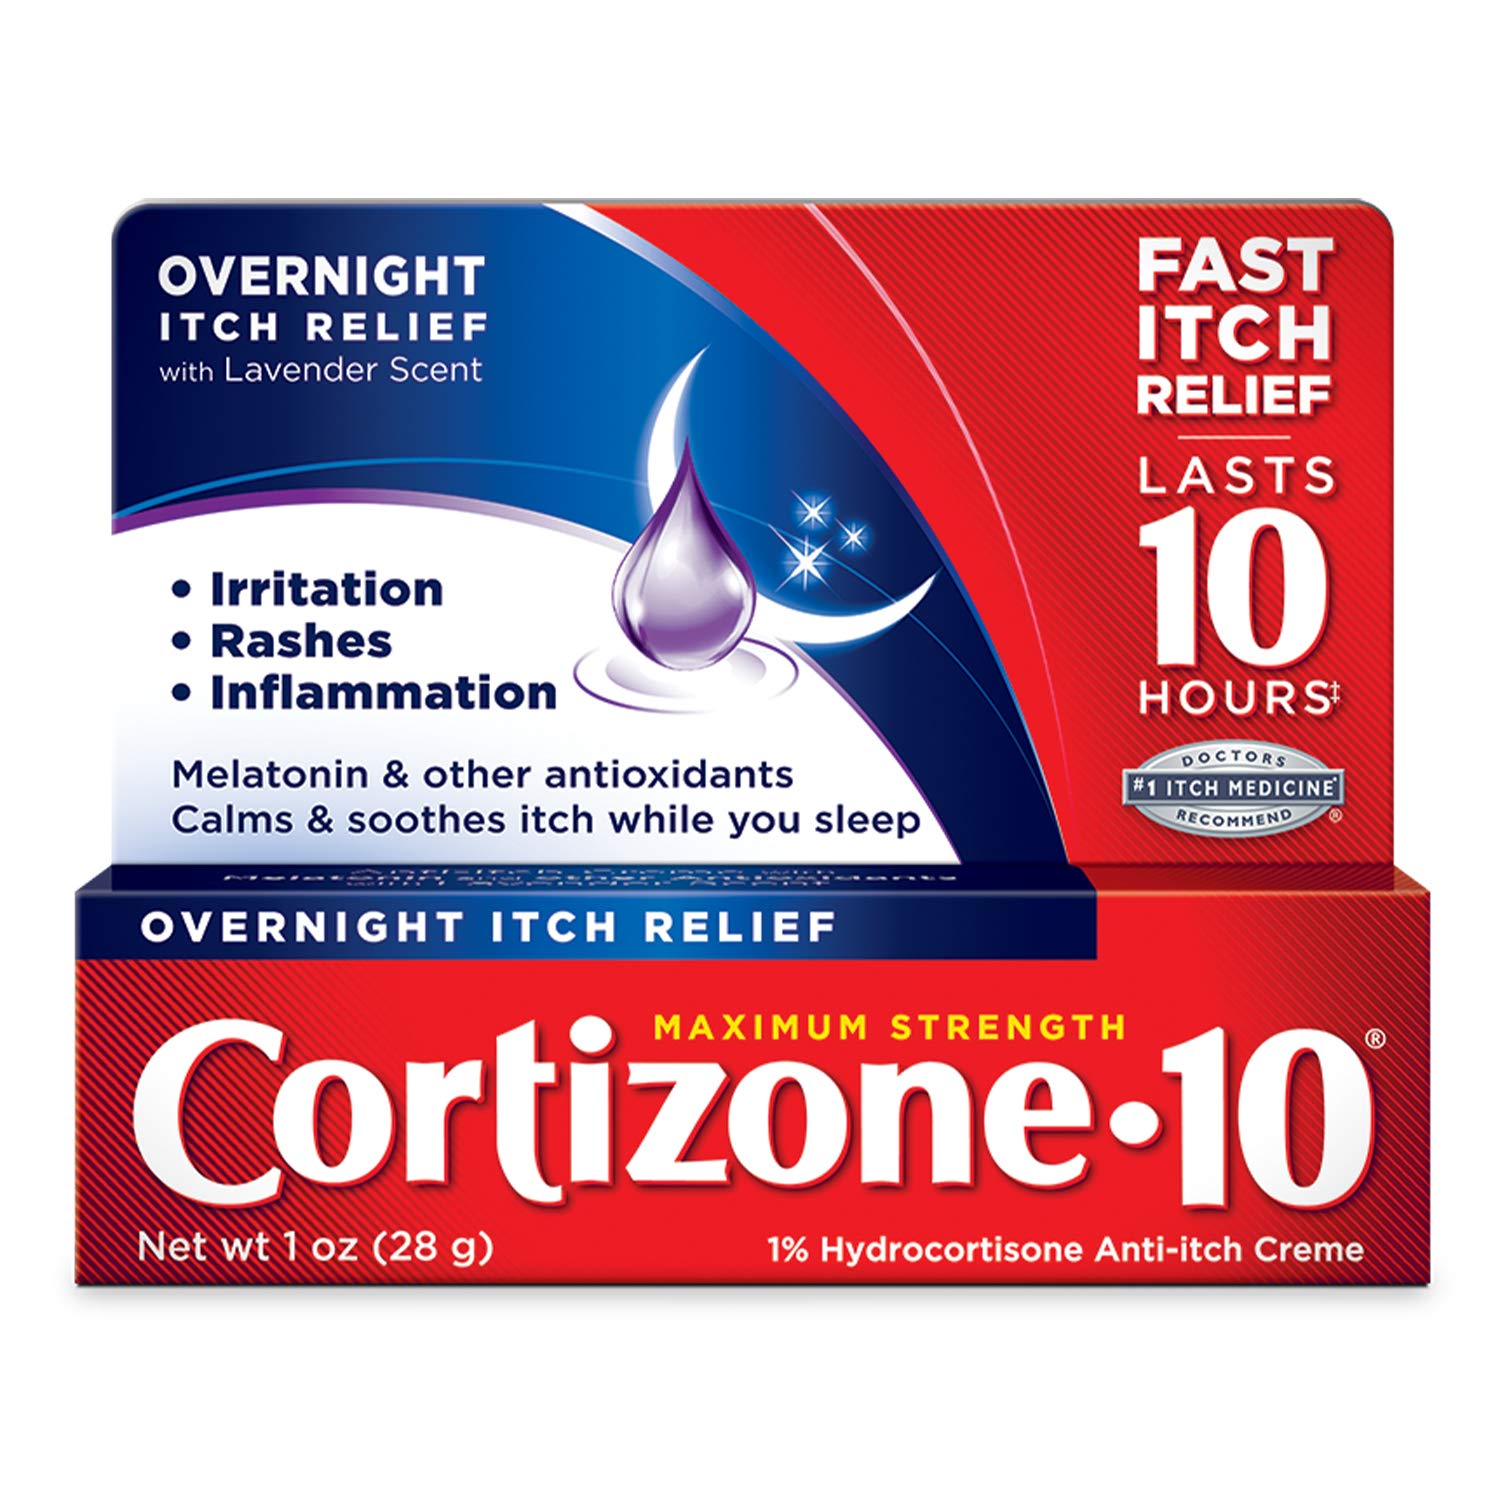 Mua Cortizone 10 Maximum Strength Overnight Itch Relief, Lavender Scent, 1%  Hydrocortisone Anti-Itch Creme, 1 Ounce trên Amazon Mỹ chính hãng 2023 |  Fado